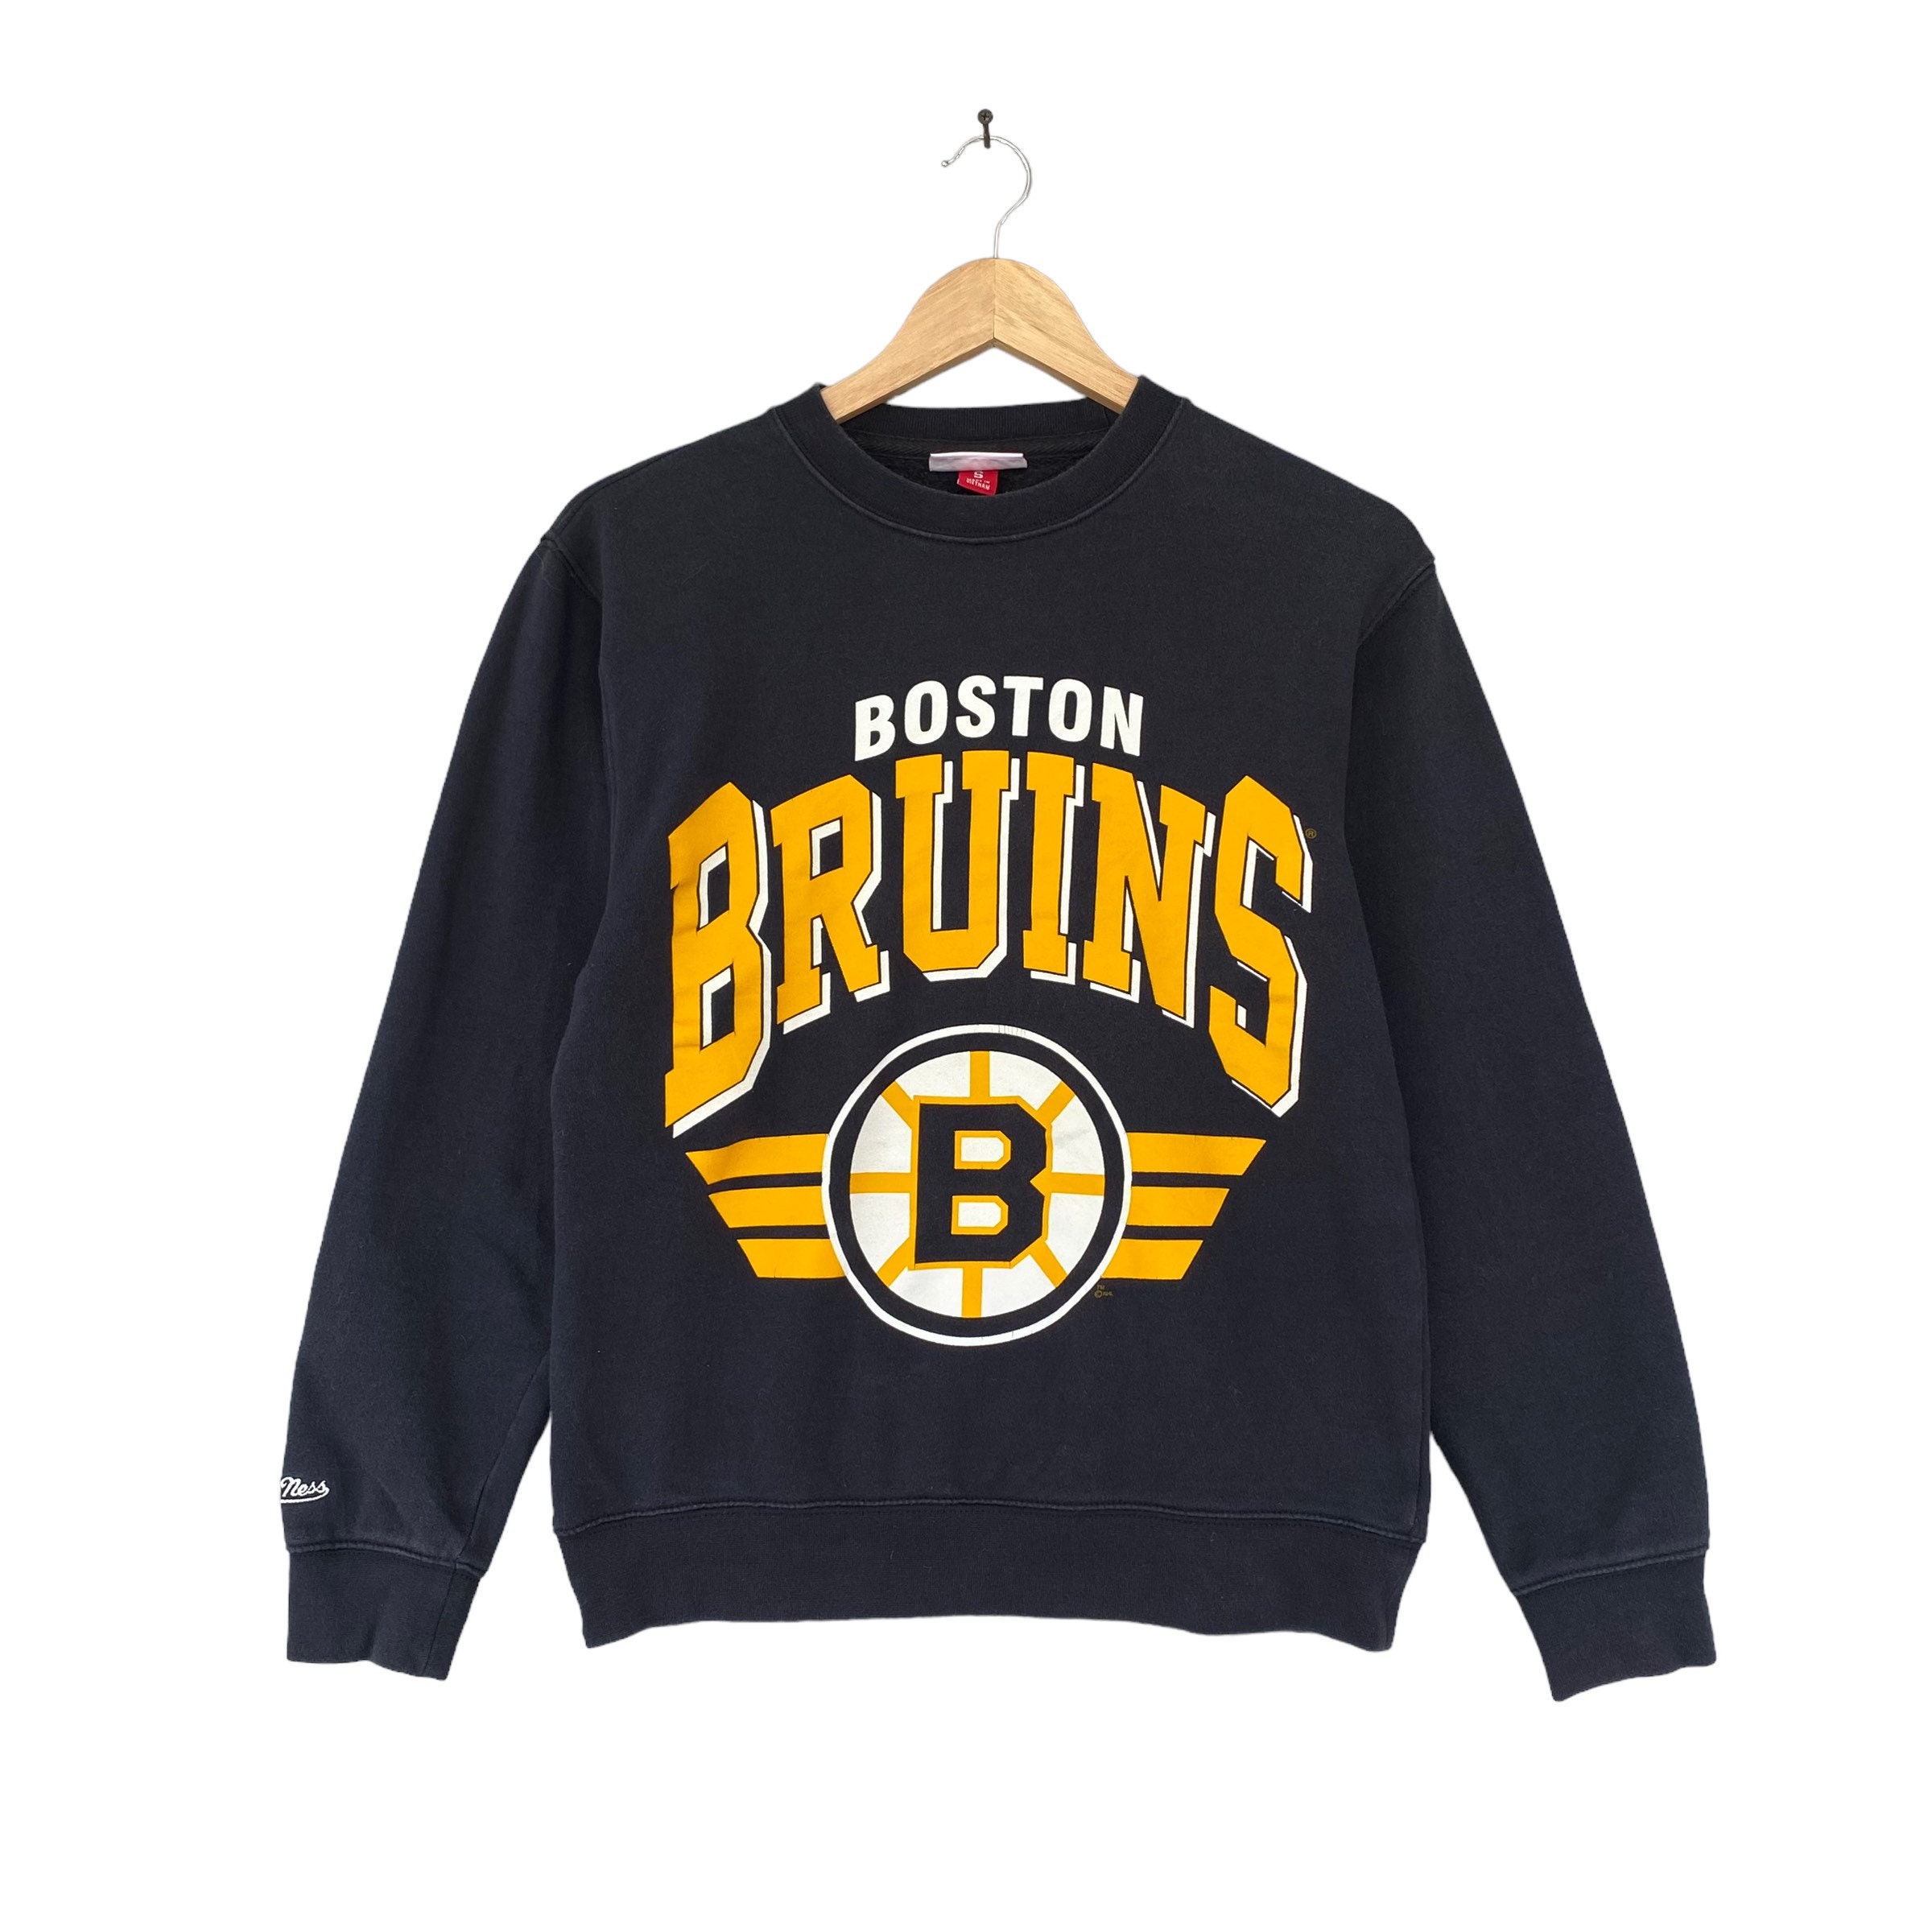 Boston Bruins Women's Apparel